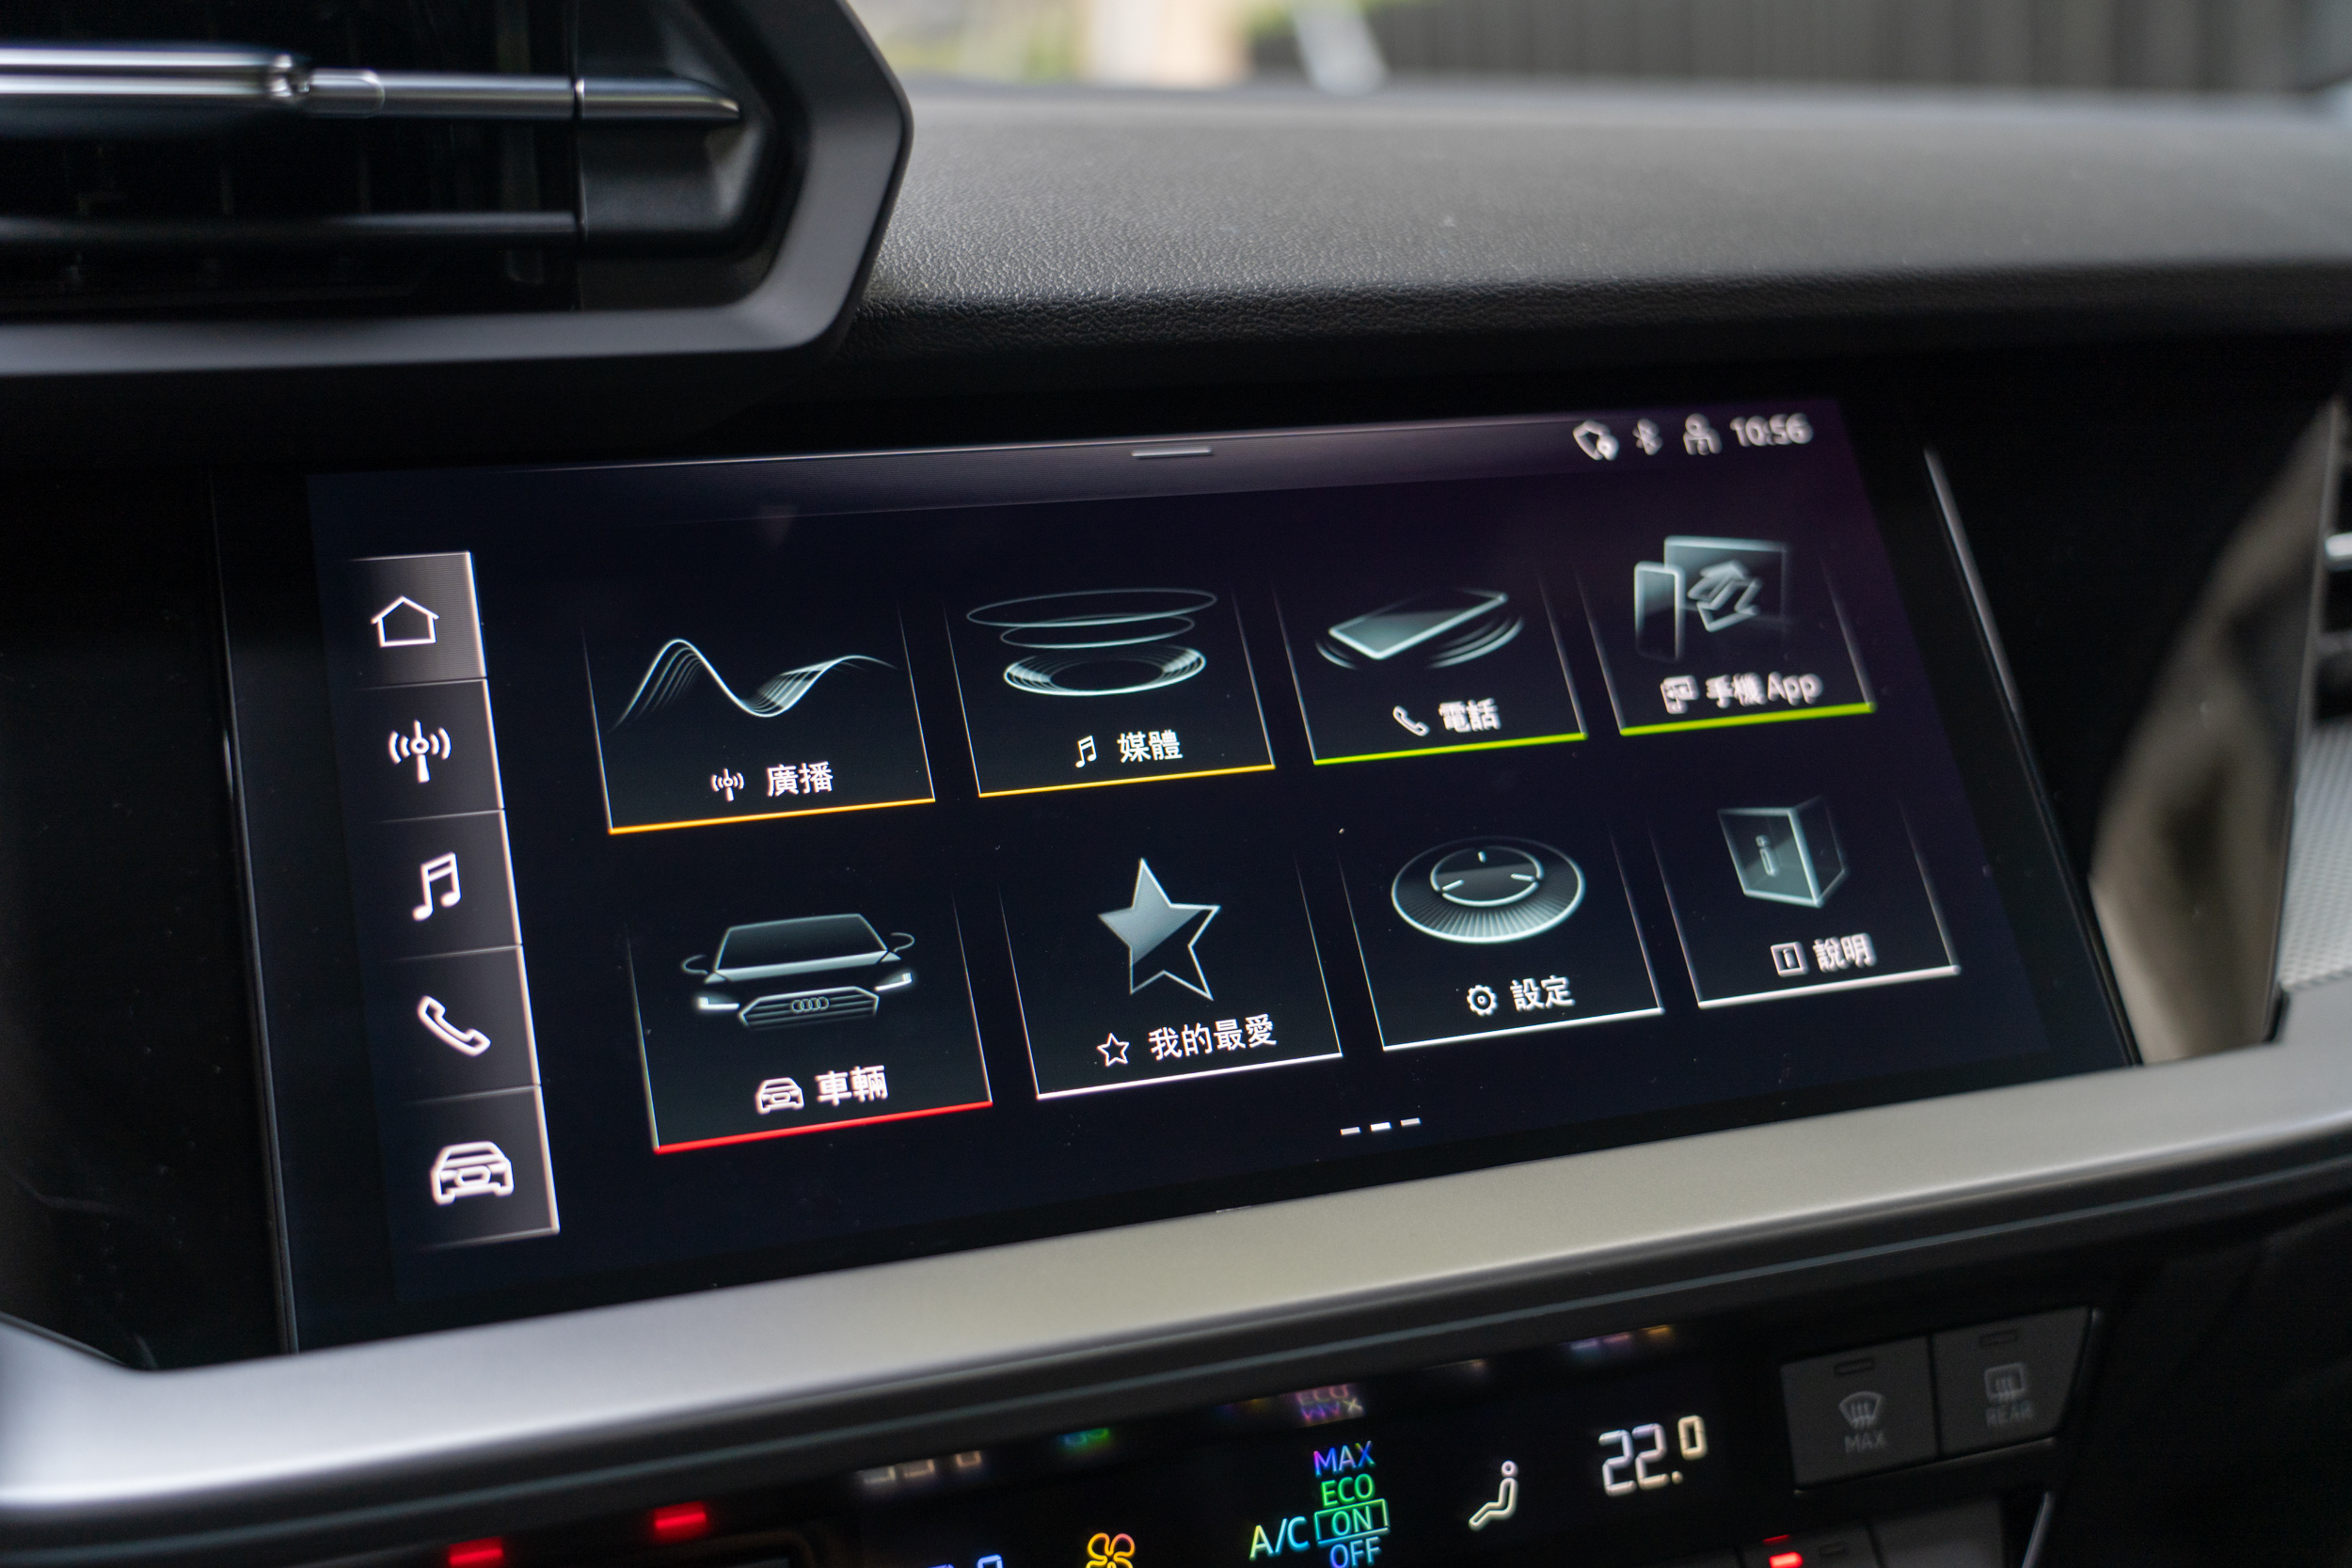 中央觸控螢幕具備 Apple CarPlay / Android Auto 互聯功能。